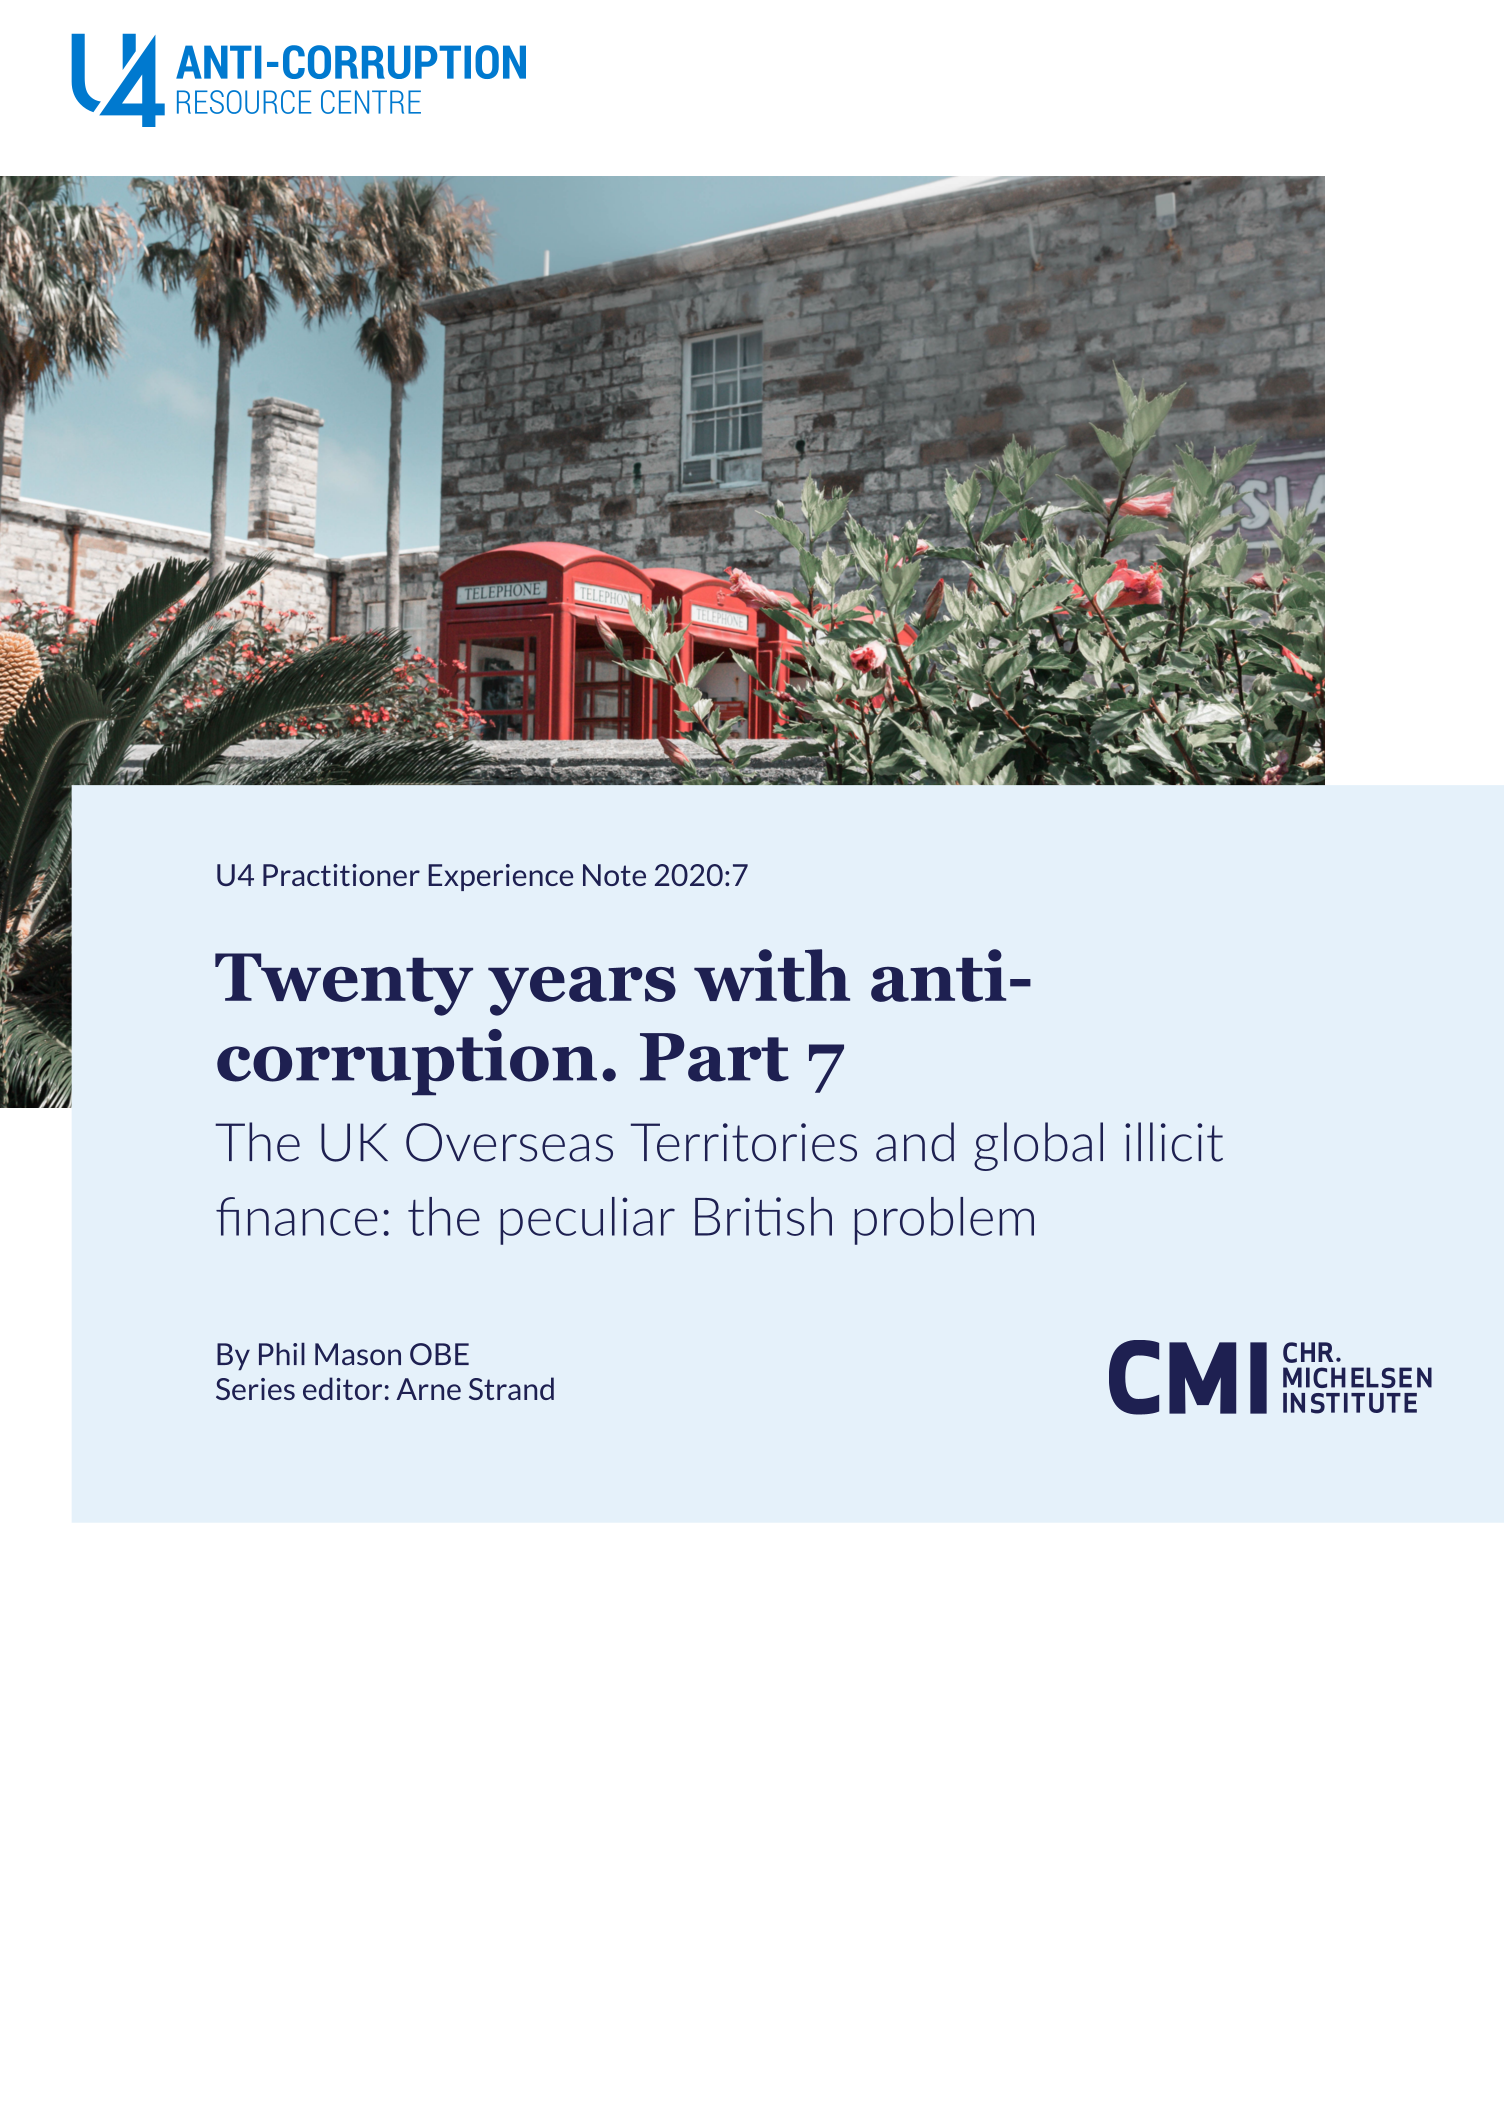 Twenty years with anti-corruption. Part 7